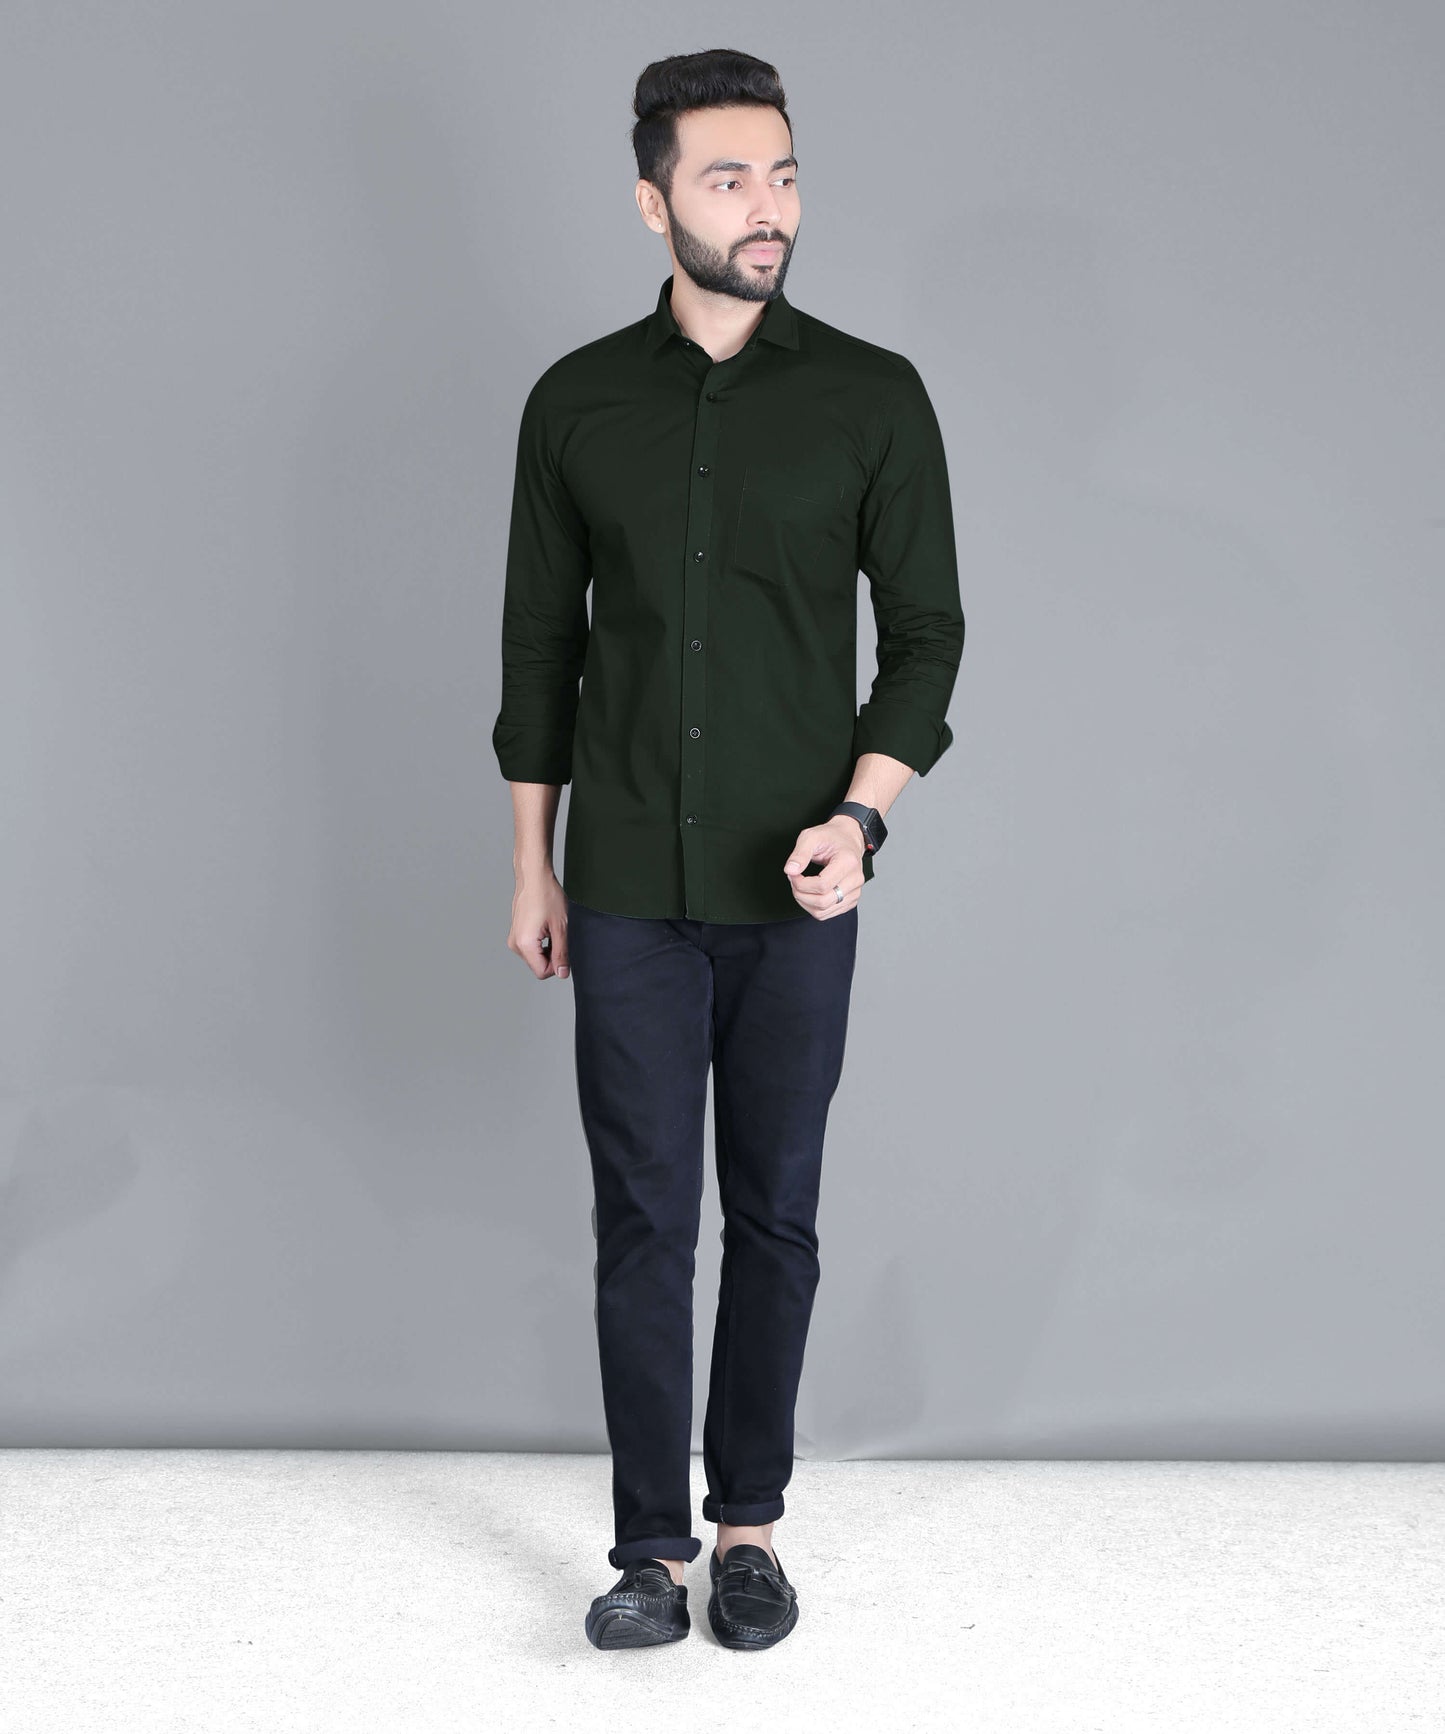 5thanfold Men's Casual Green Full Sleeve Pure Cotton Mandarin Collar Shirt (No Pocket)